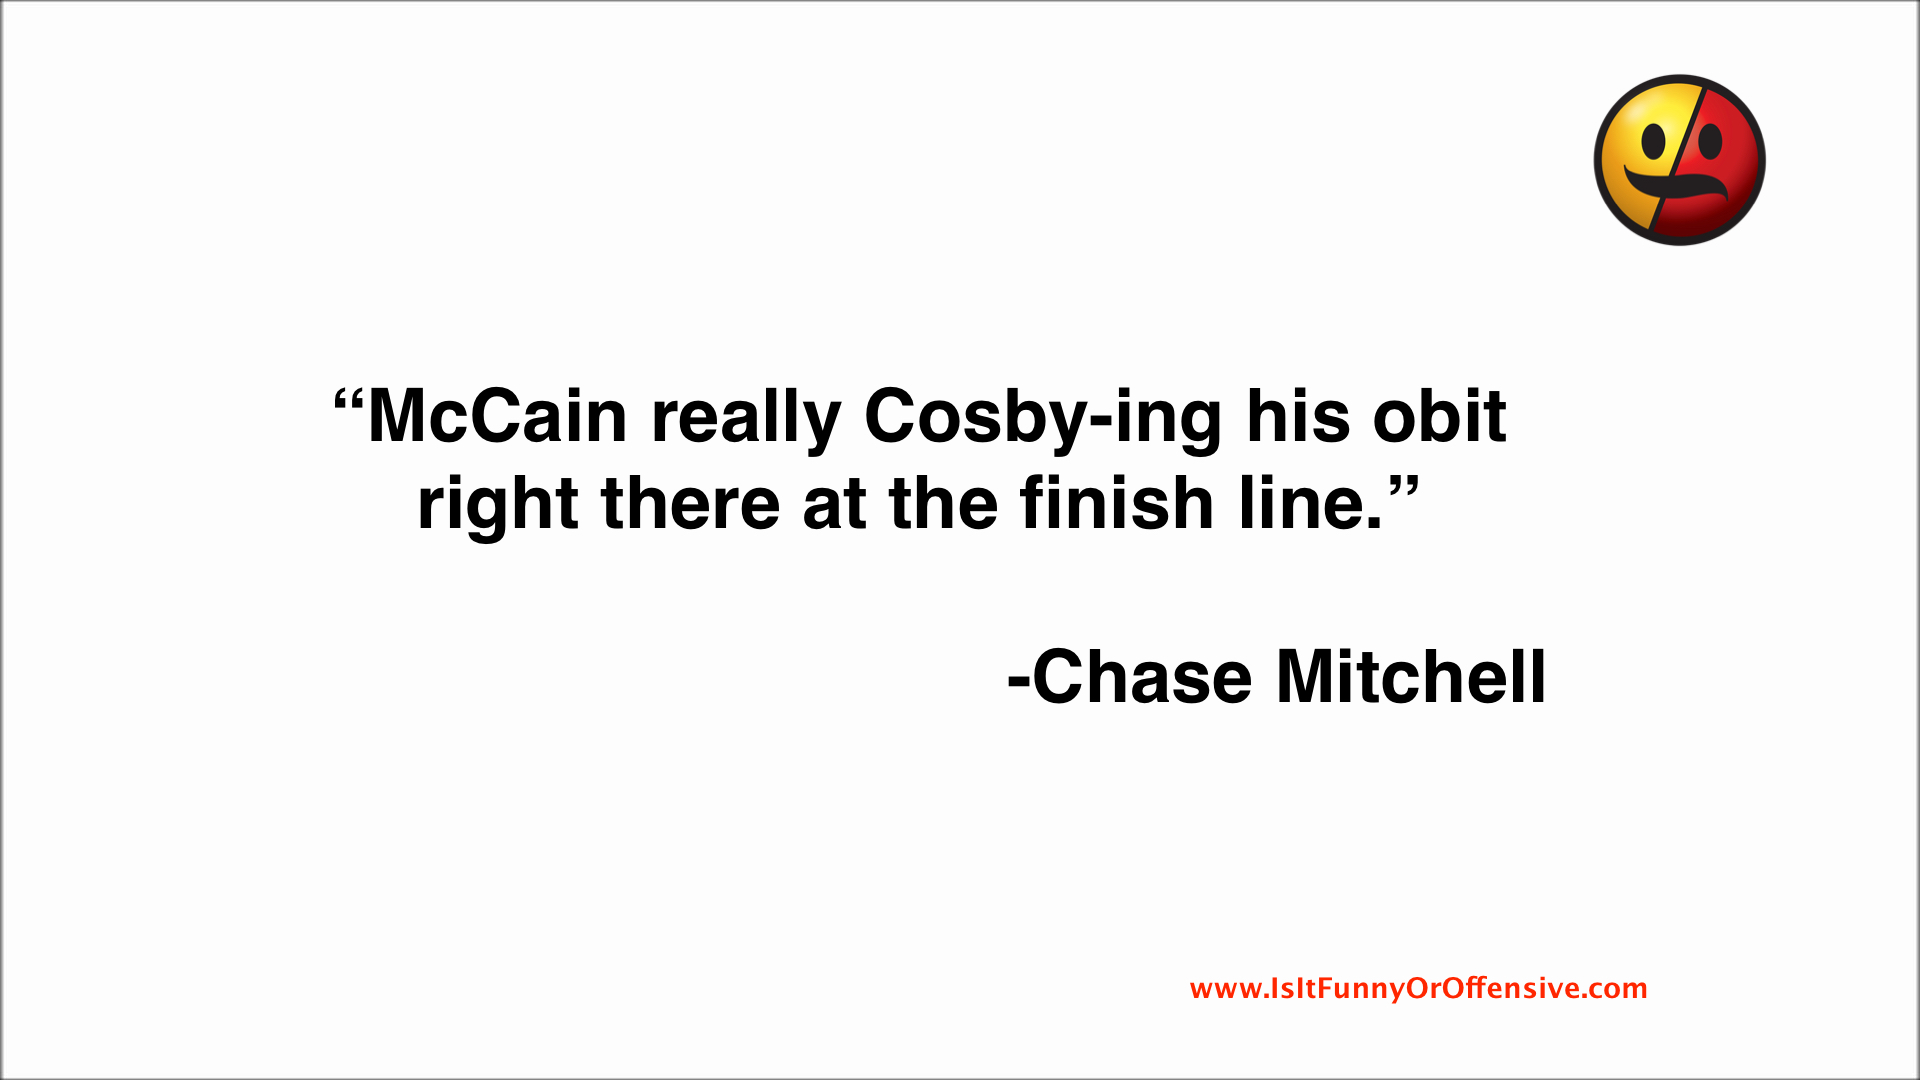 Chase Mitchell on John McCain Healthcare Vote